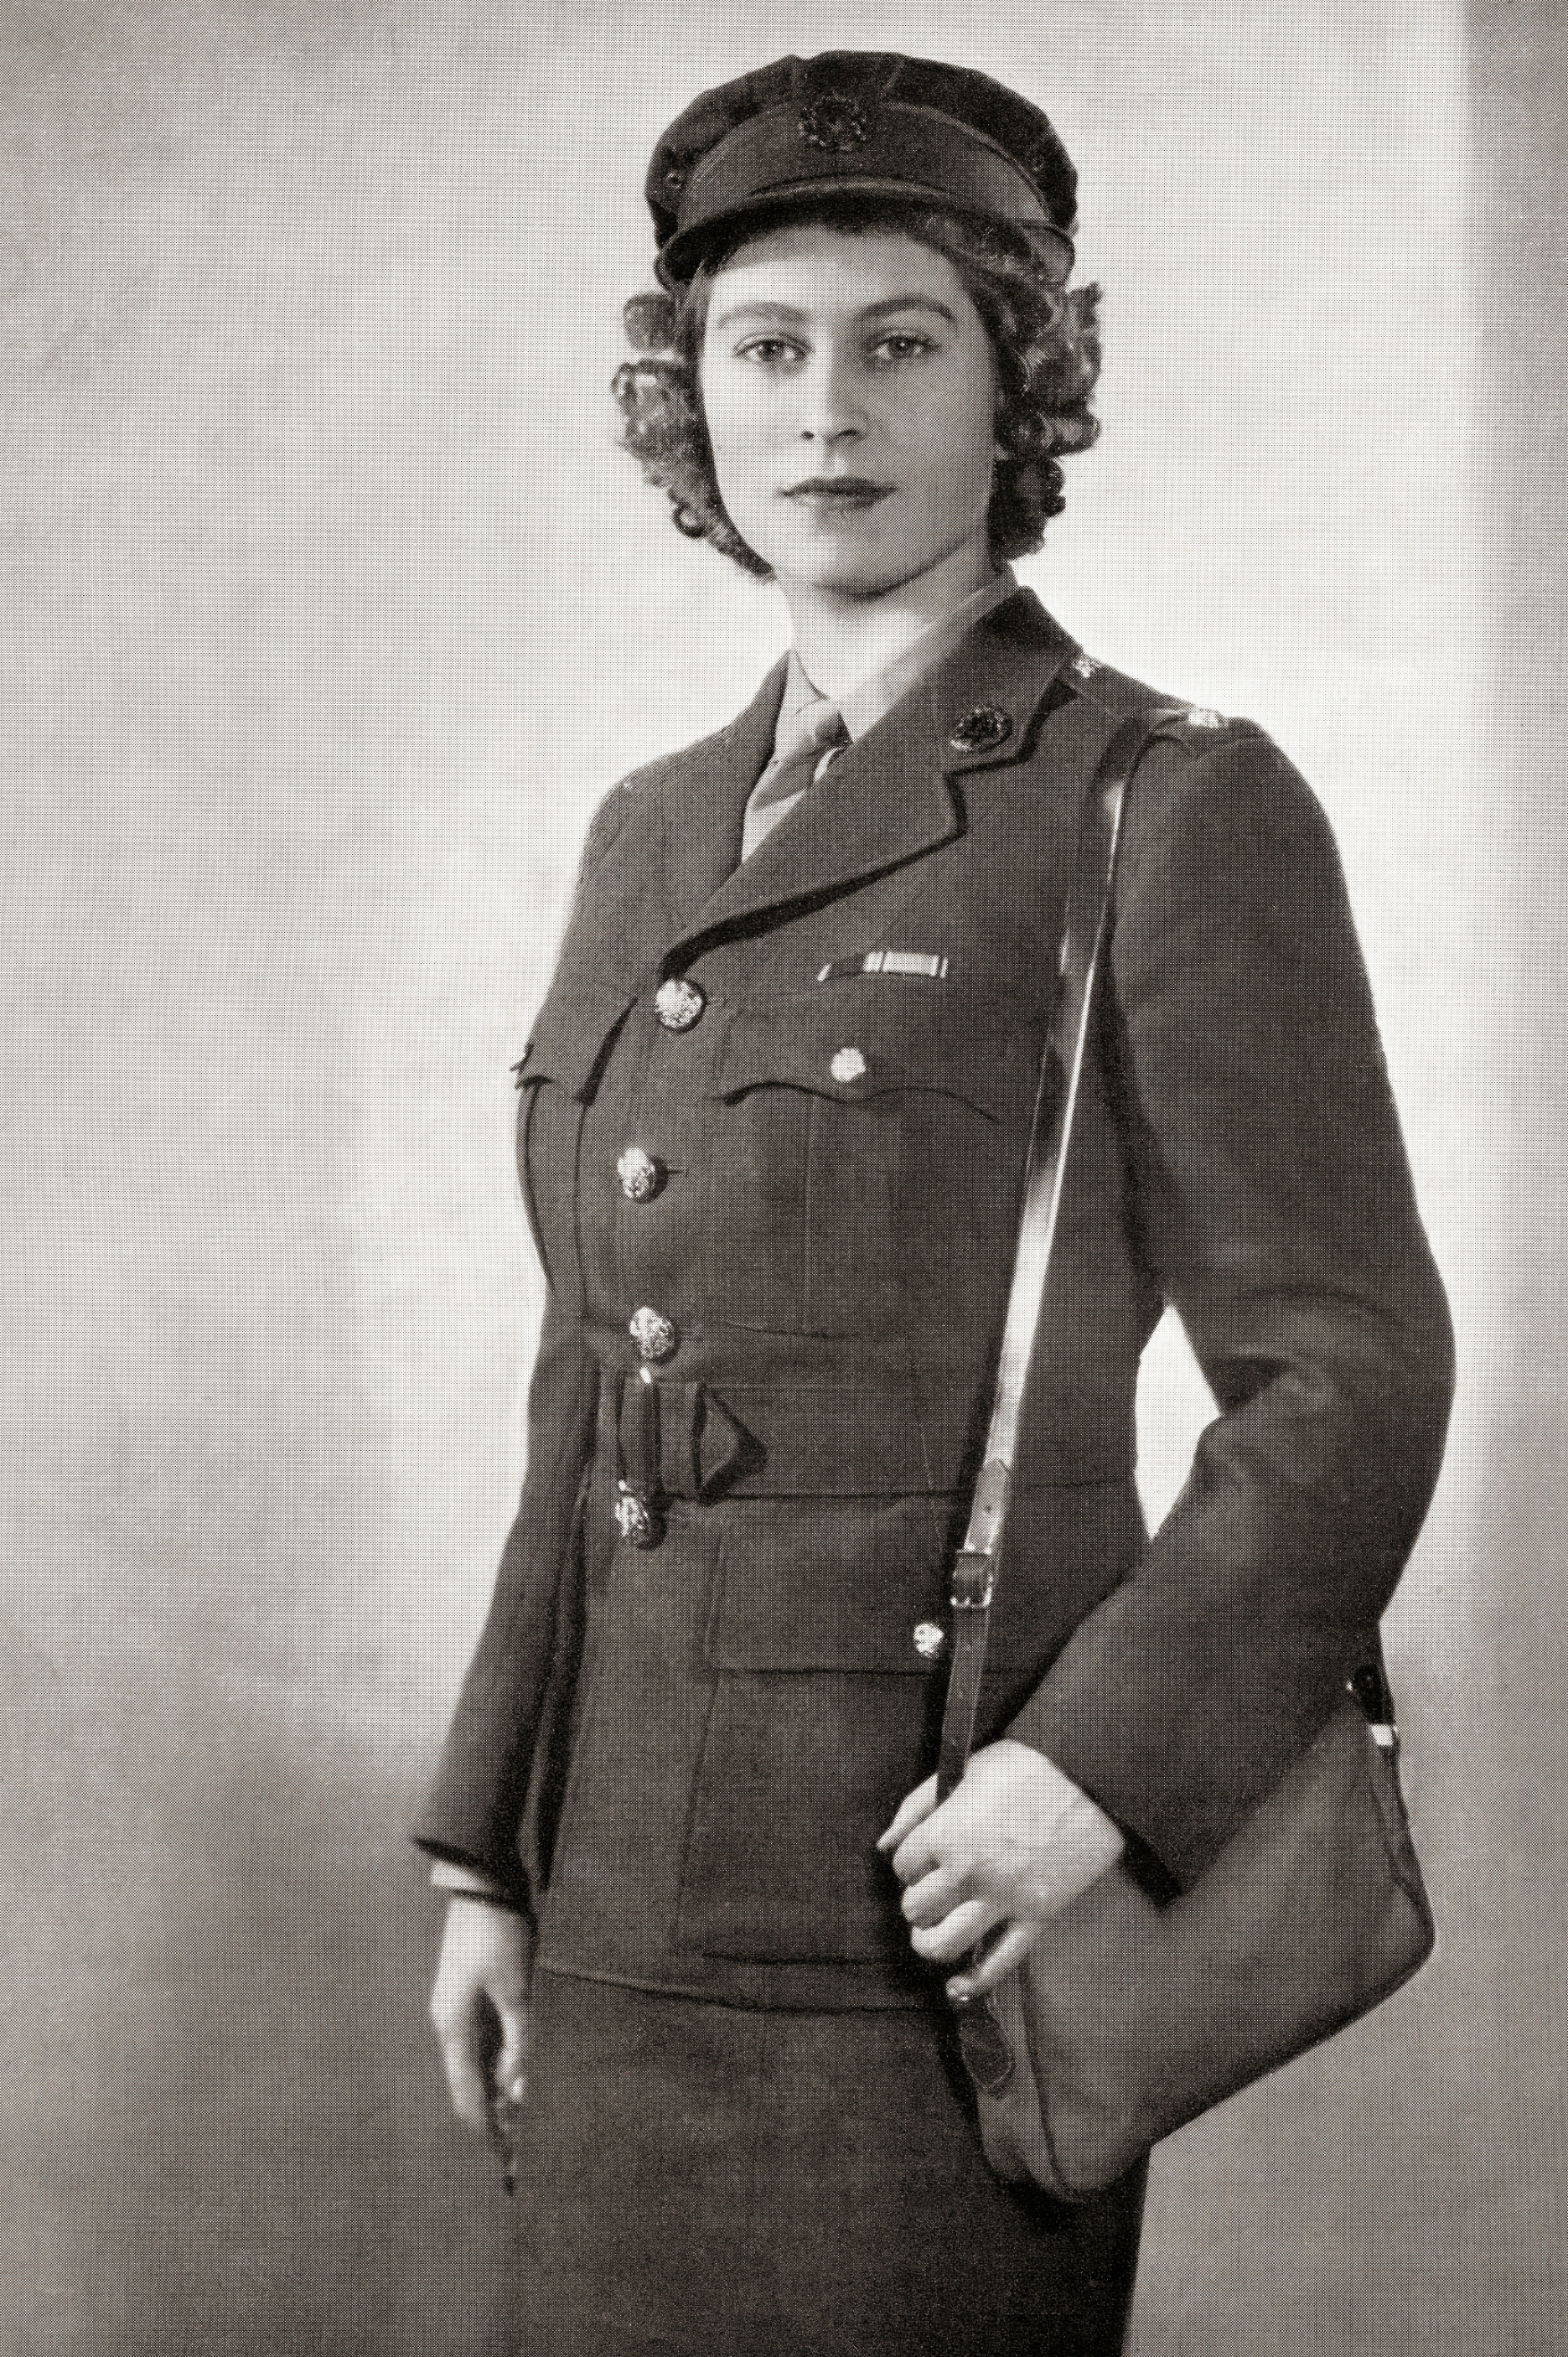 A young Elizabeth in a military uniform